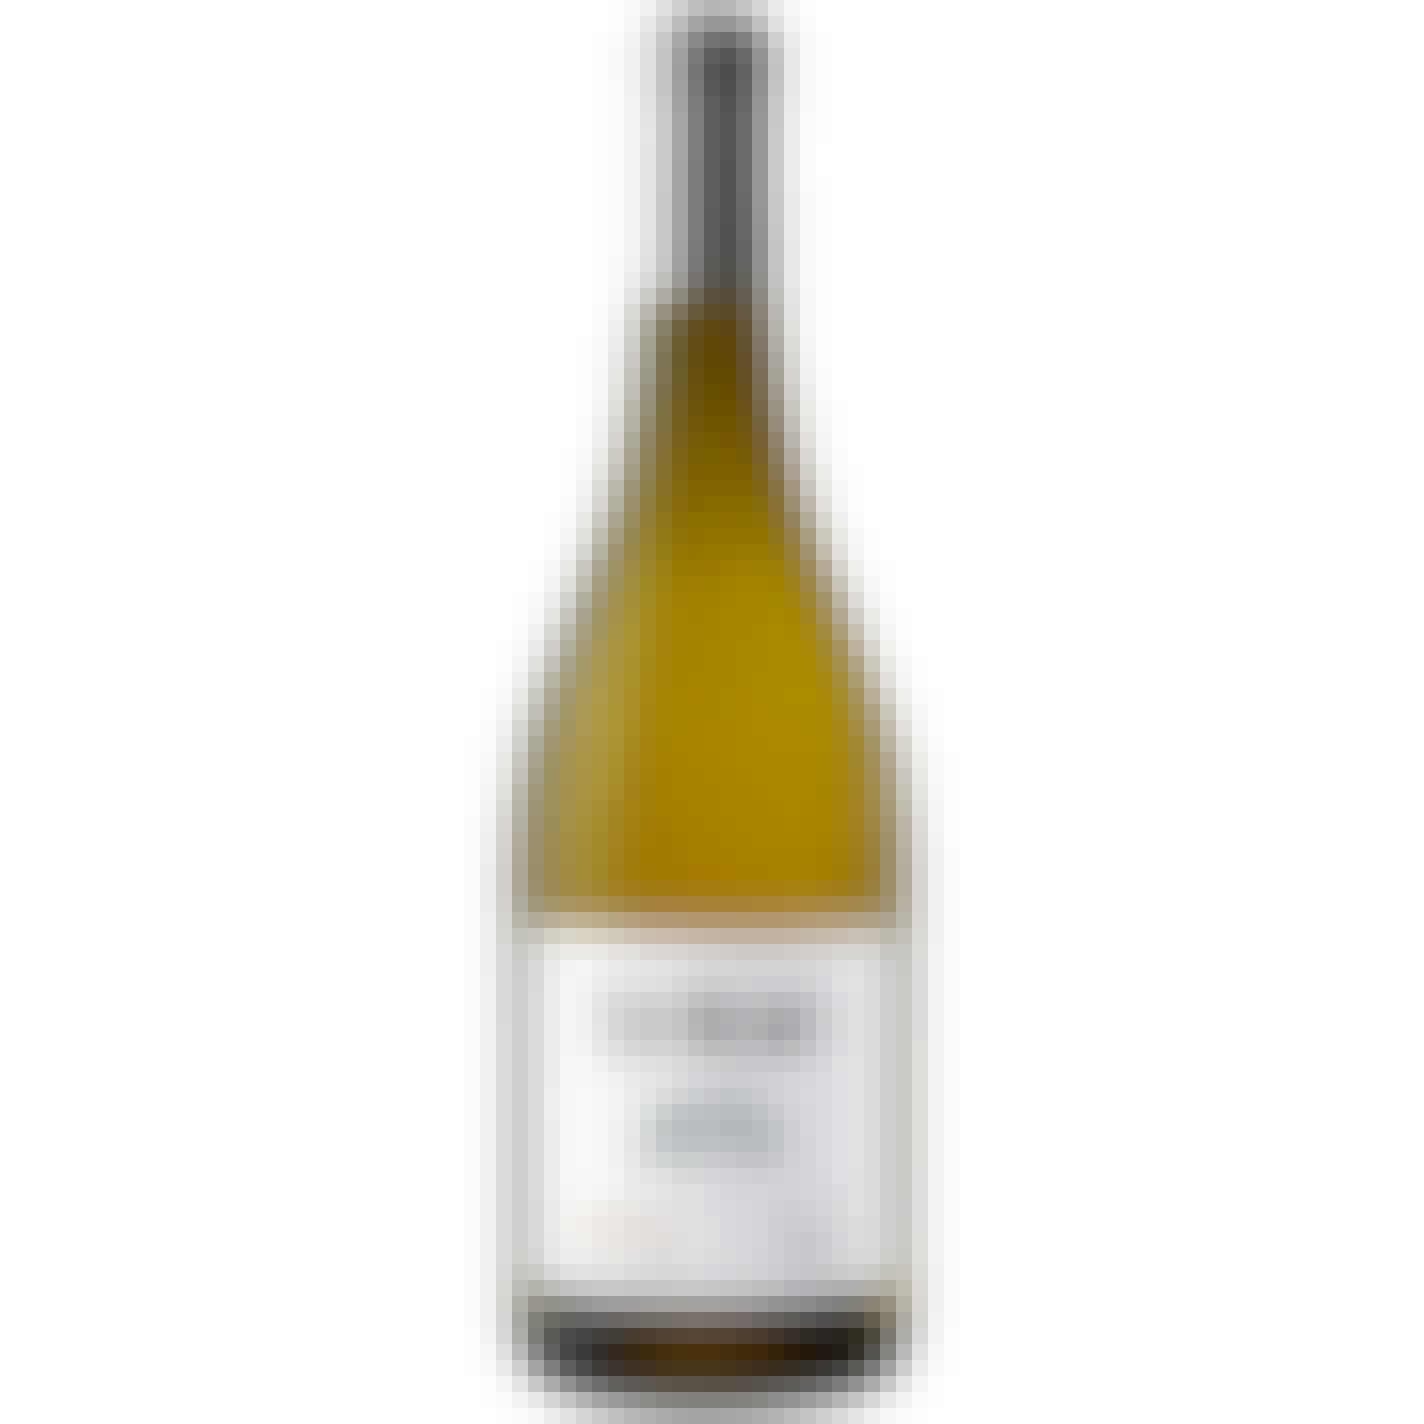 Ca' Momi Napa Valley Chardonnay 2019 750ml